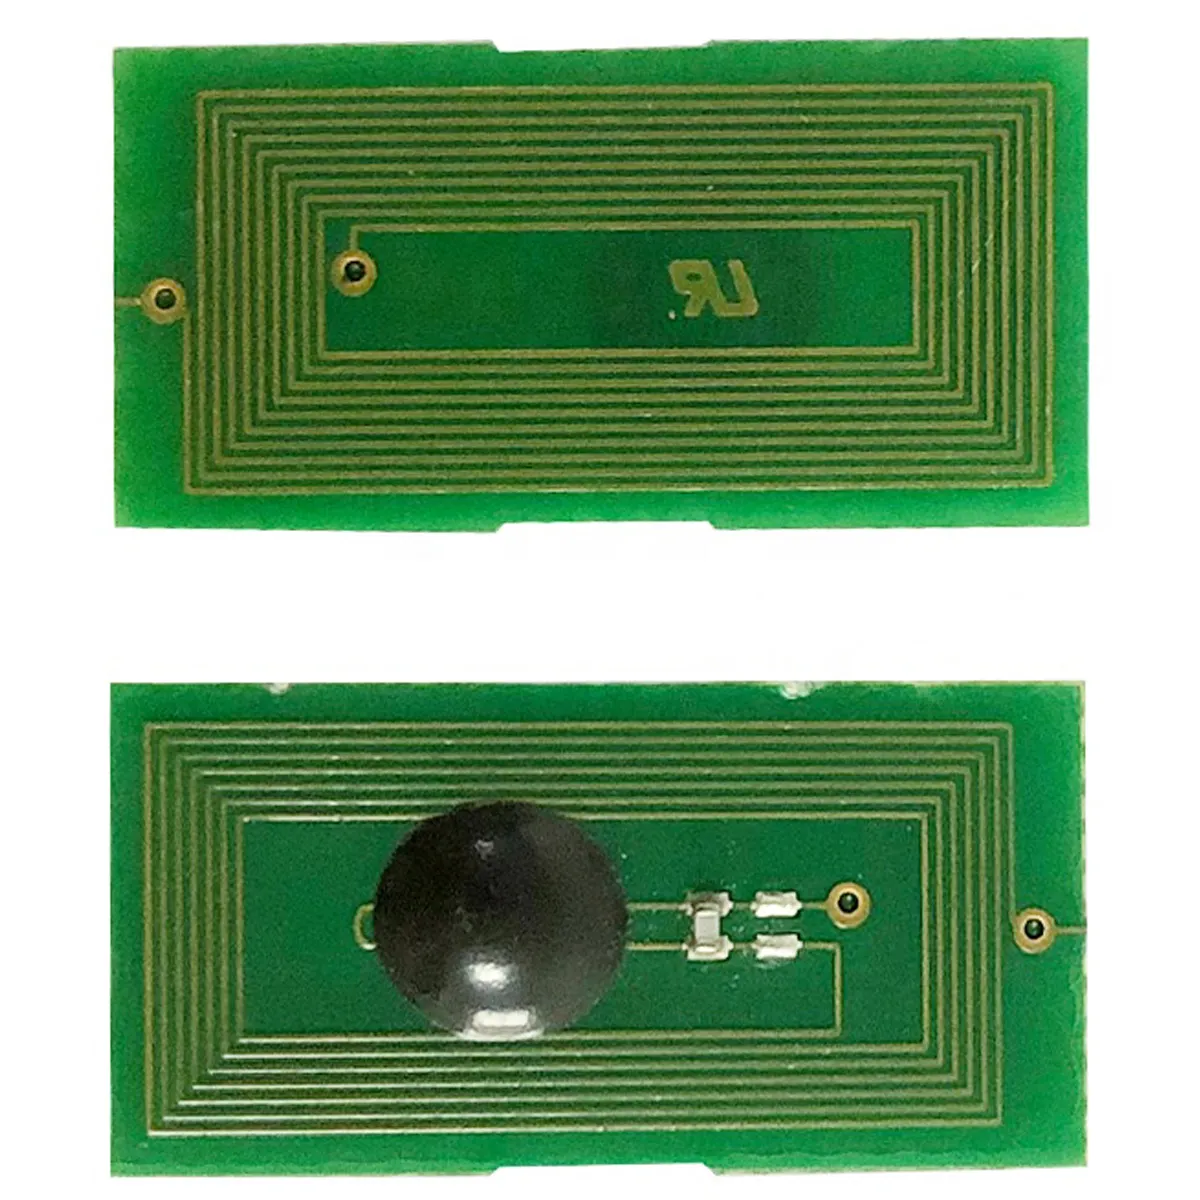 Gestetner AFSP 5200S用チップレーザープリンターカートリッジチップコピー機カートリッジコピー機チップ/リコーインク用